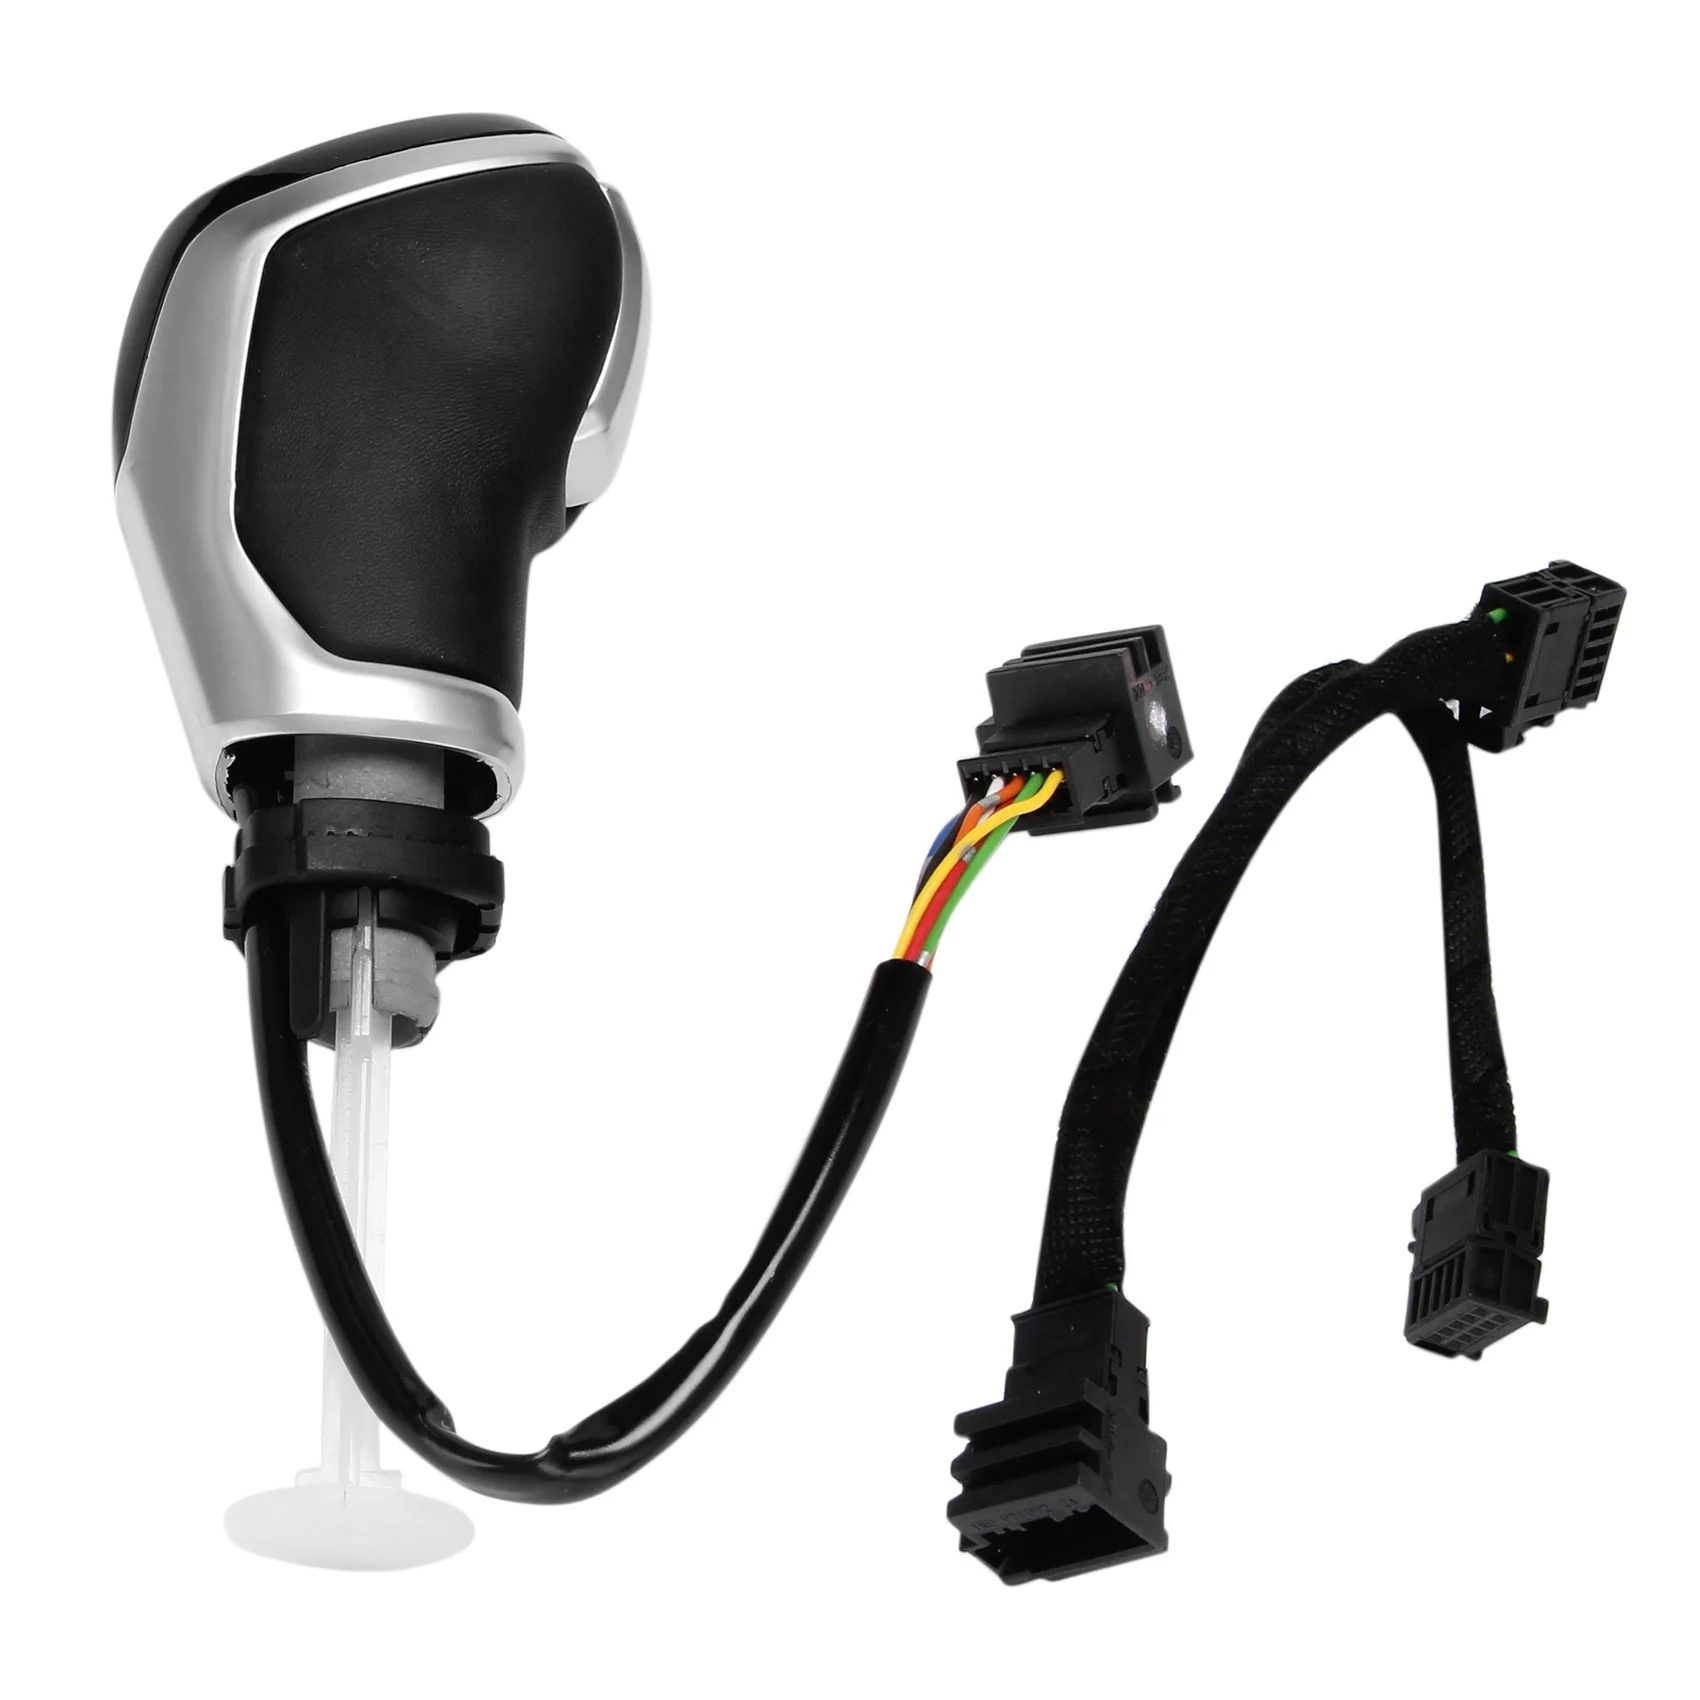 Electronic Shift Handle LED Gear Shift Knob for Golf MK6 MK7 Passat B7 B8 Tiguan MK2 DSG, White Light